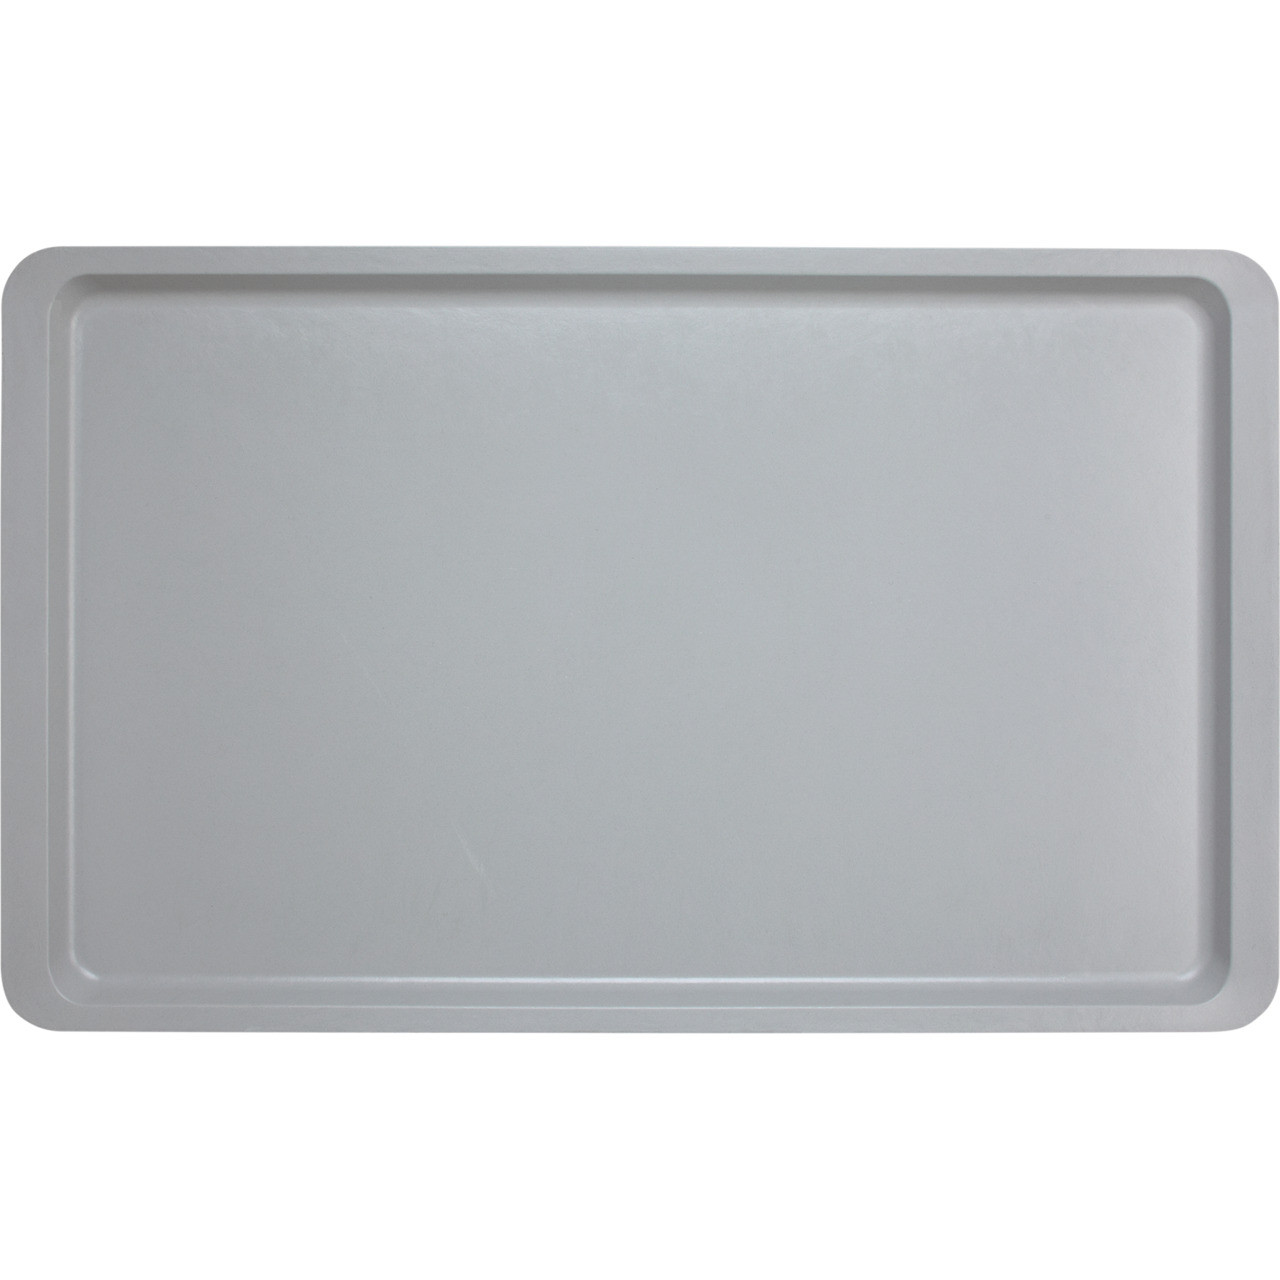 GN-Tablett Polyester Lite glatt GN 1/2 325 x 265 mm lichtgrau